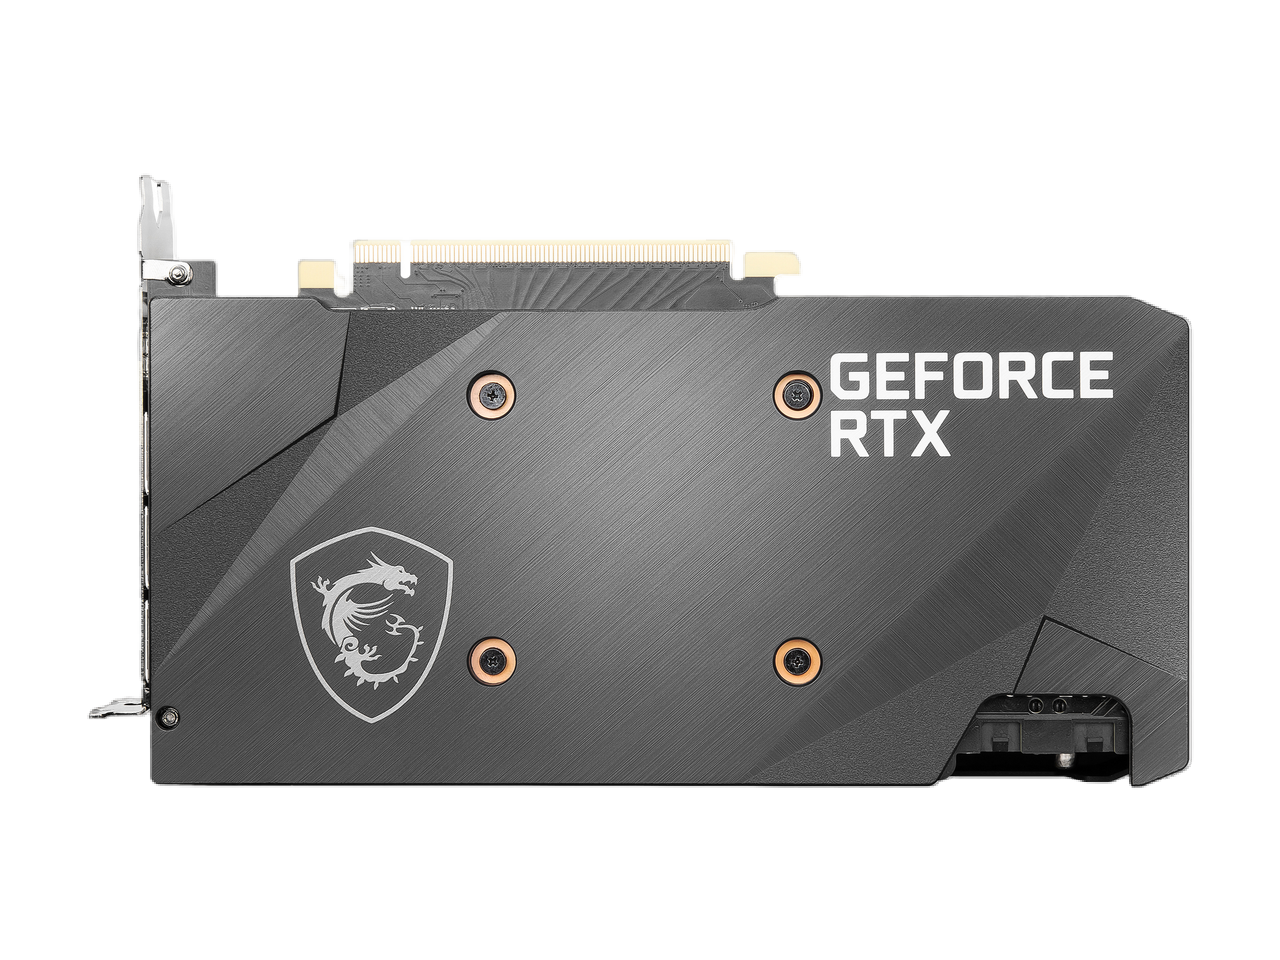 MSI Ventus GeForce RTX 3070 8GB GDDR6 PCI Express 4.0 Video Card RTX 3070 Ventus 2X 8G OC LHR